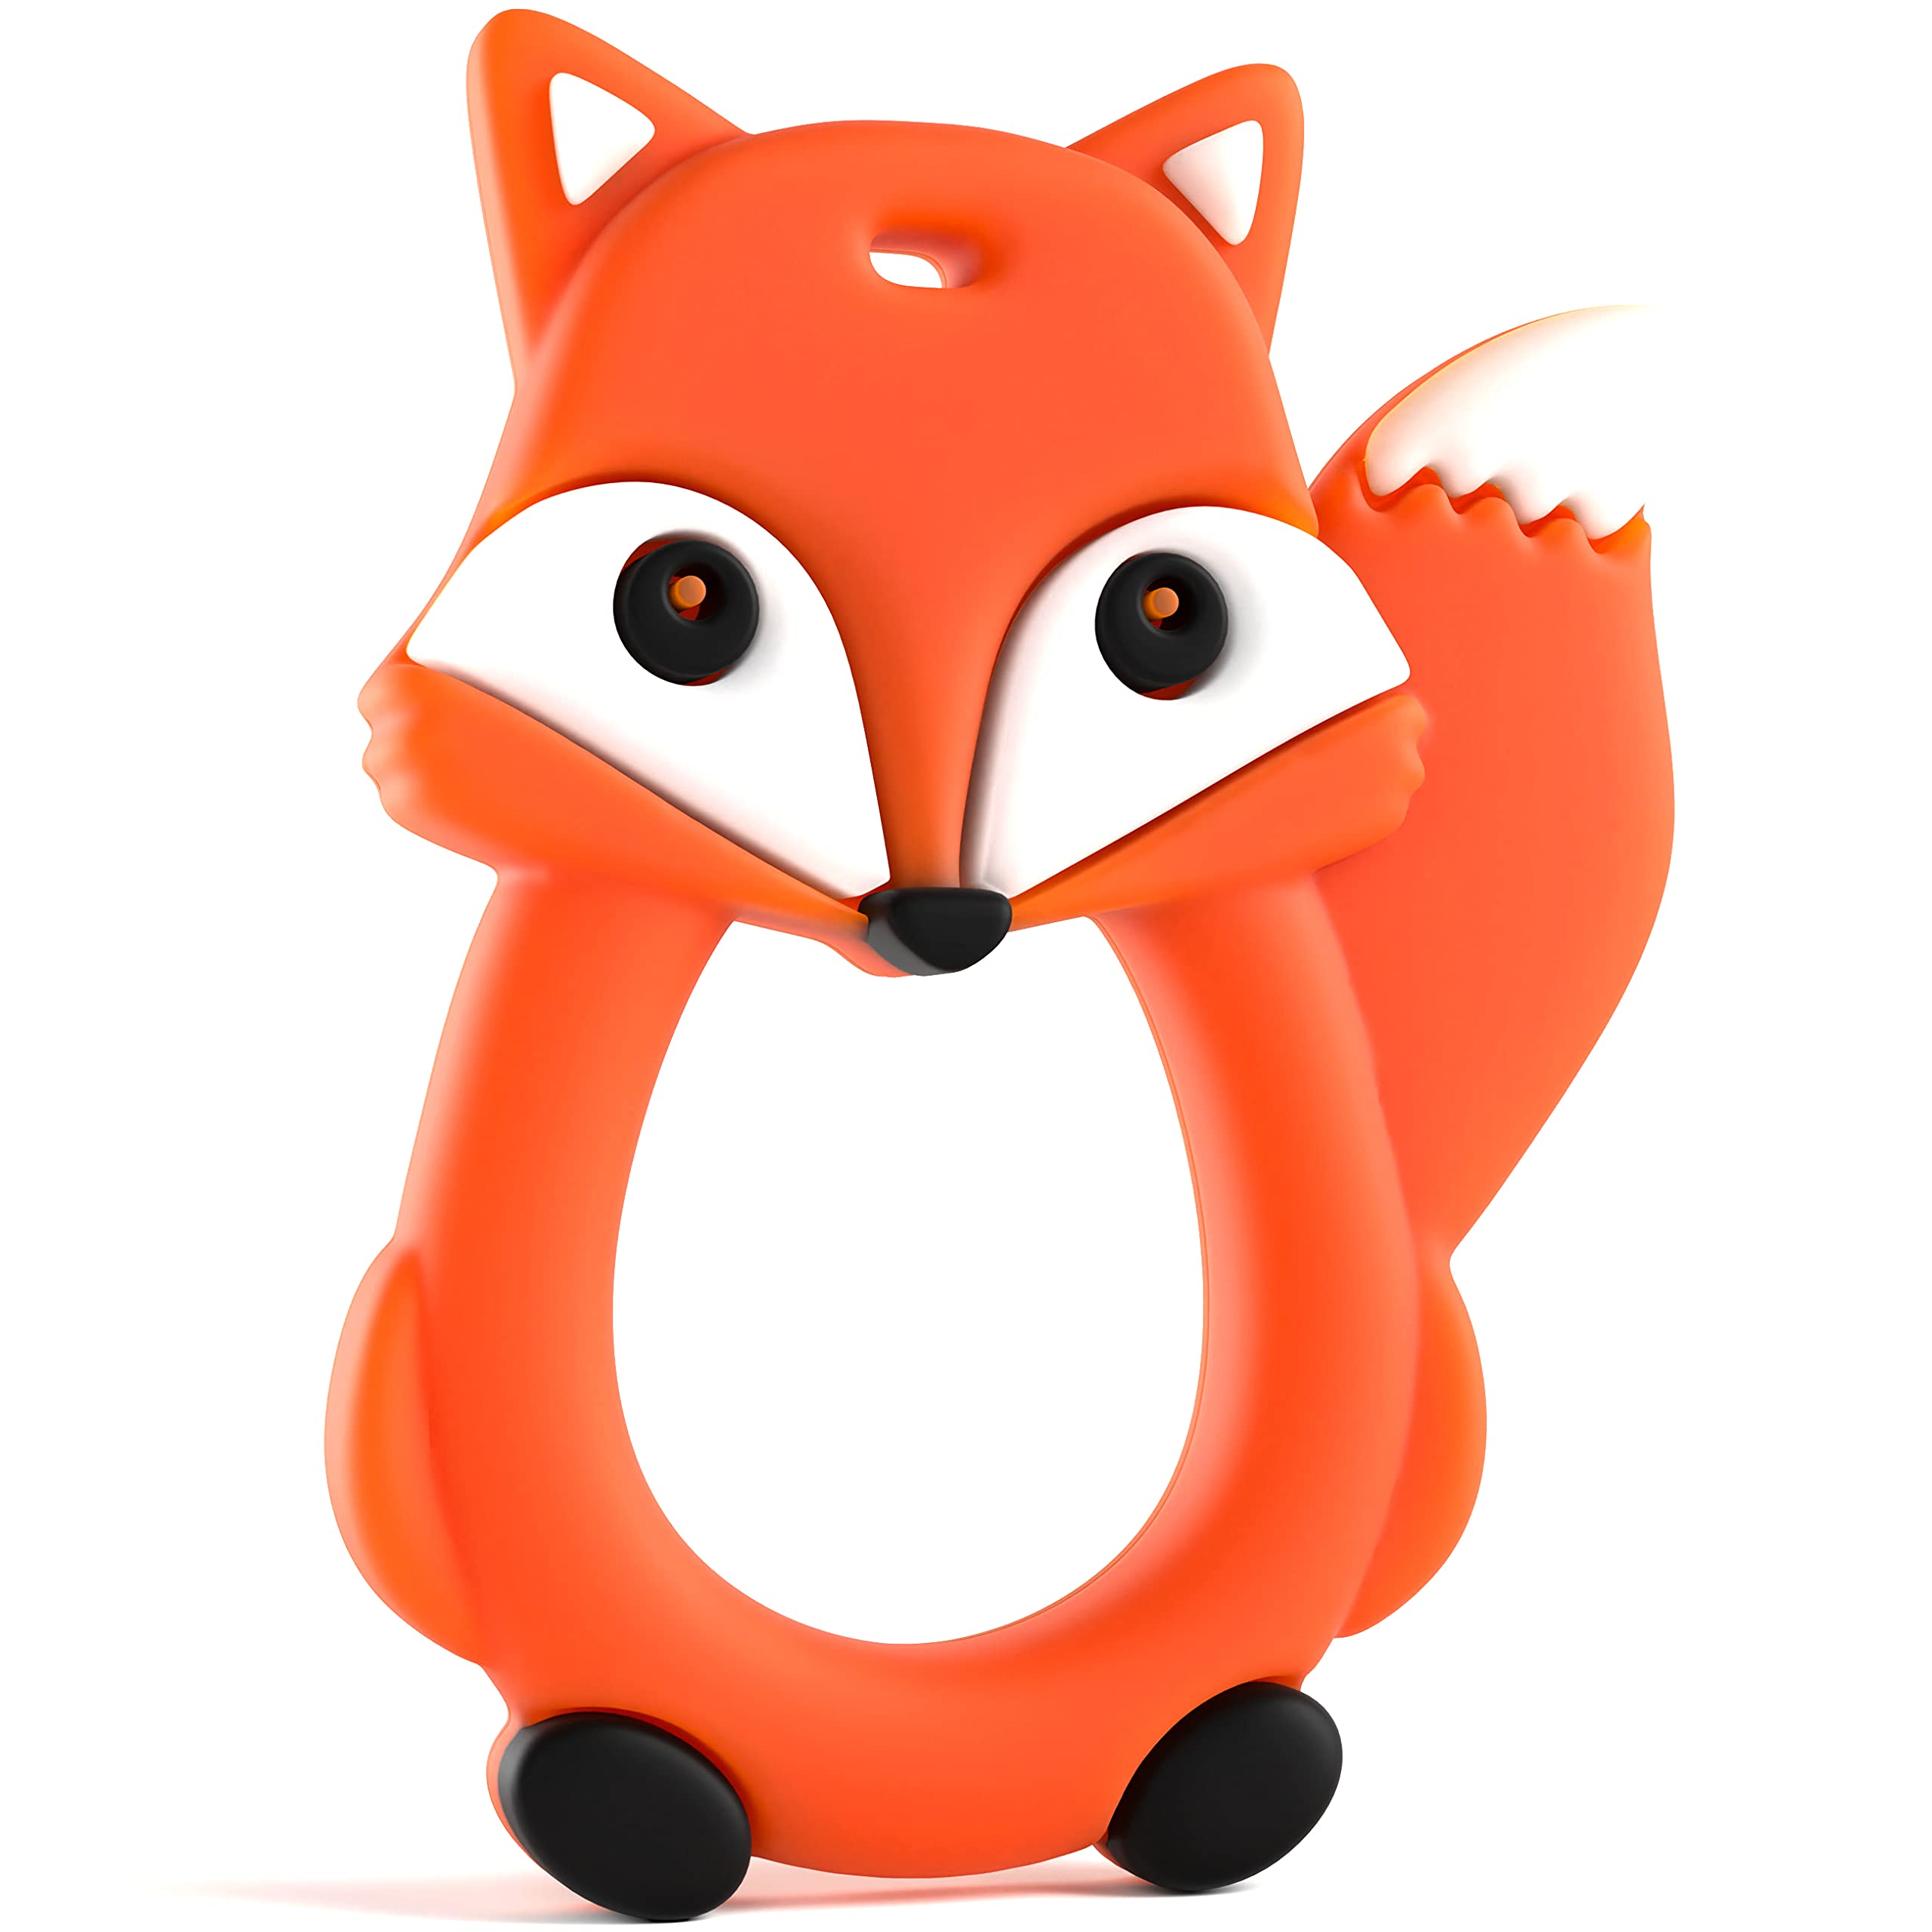 Fox Teething Toy by Baby Uma - Soft Sensory, Cute Animal Teether, BPA Free Silicone - Orange